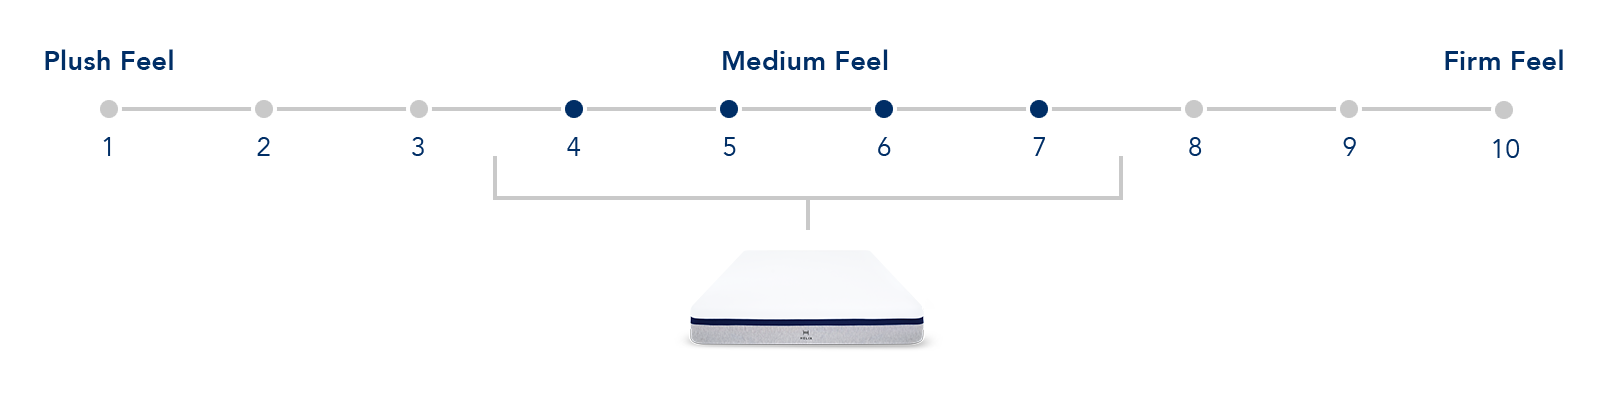 mattress firmness scale image